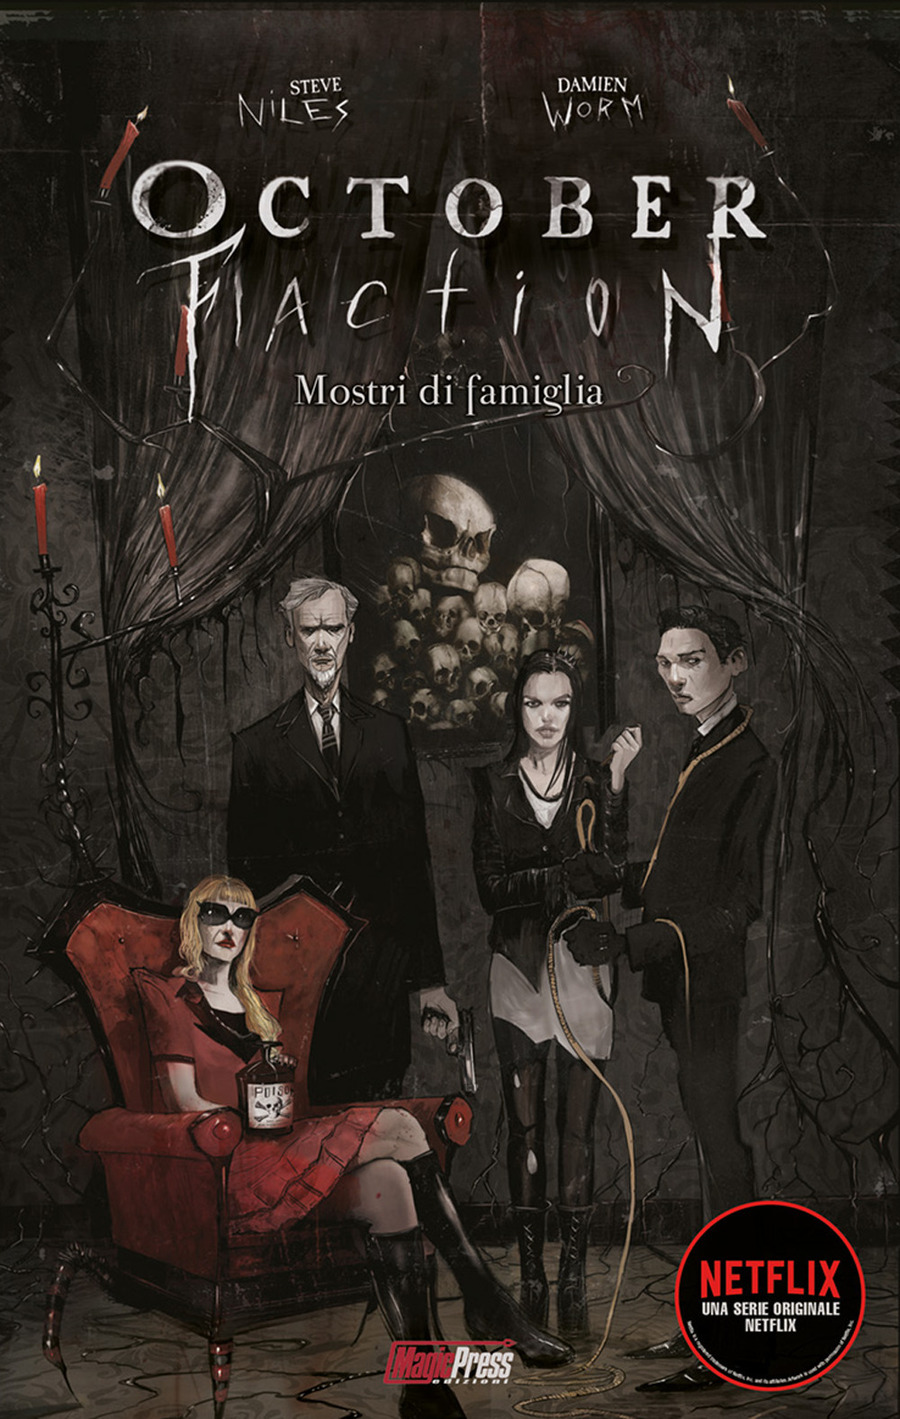 October faction